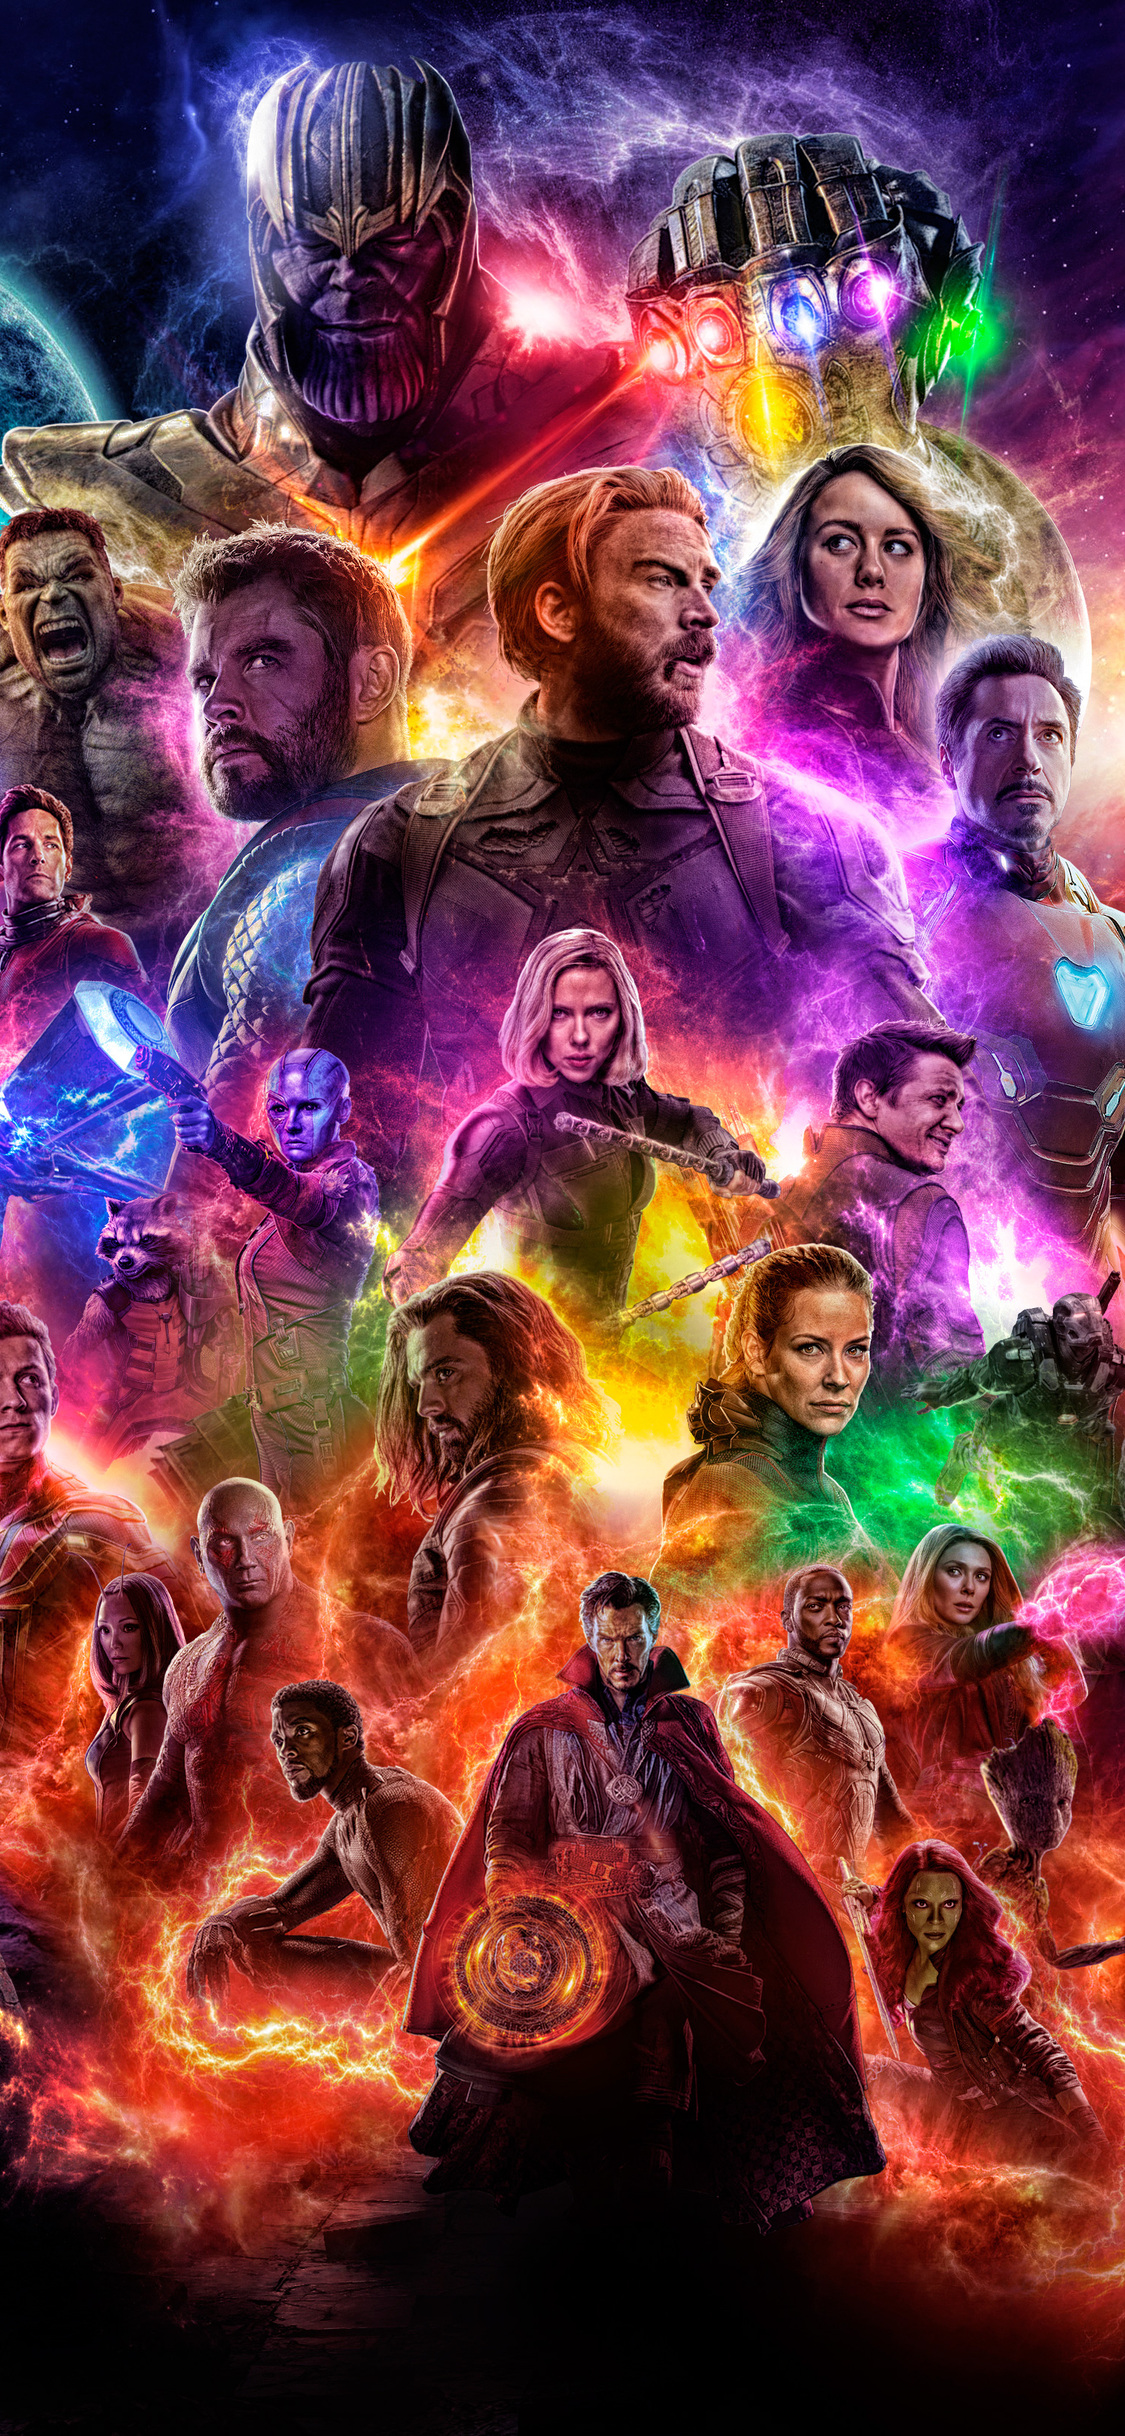 Avengers-endgame-wallpaper-iphone-x - Best Wallpapers Cloud